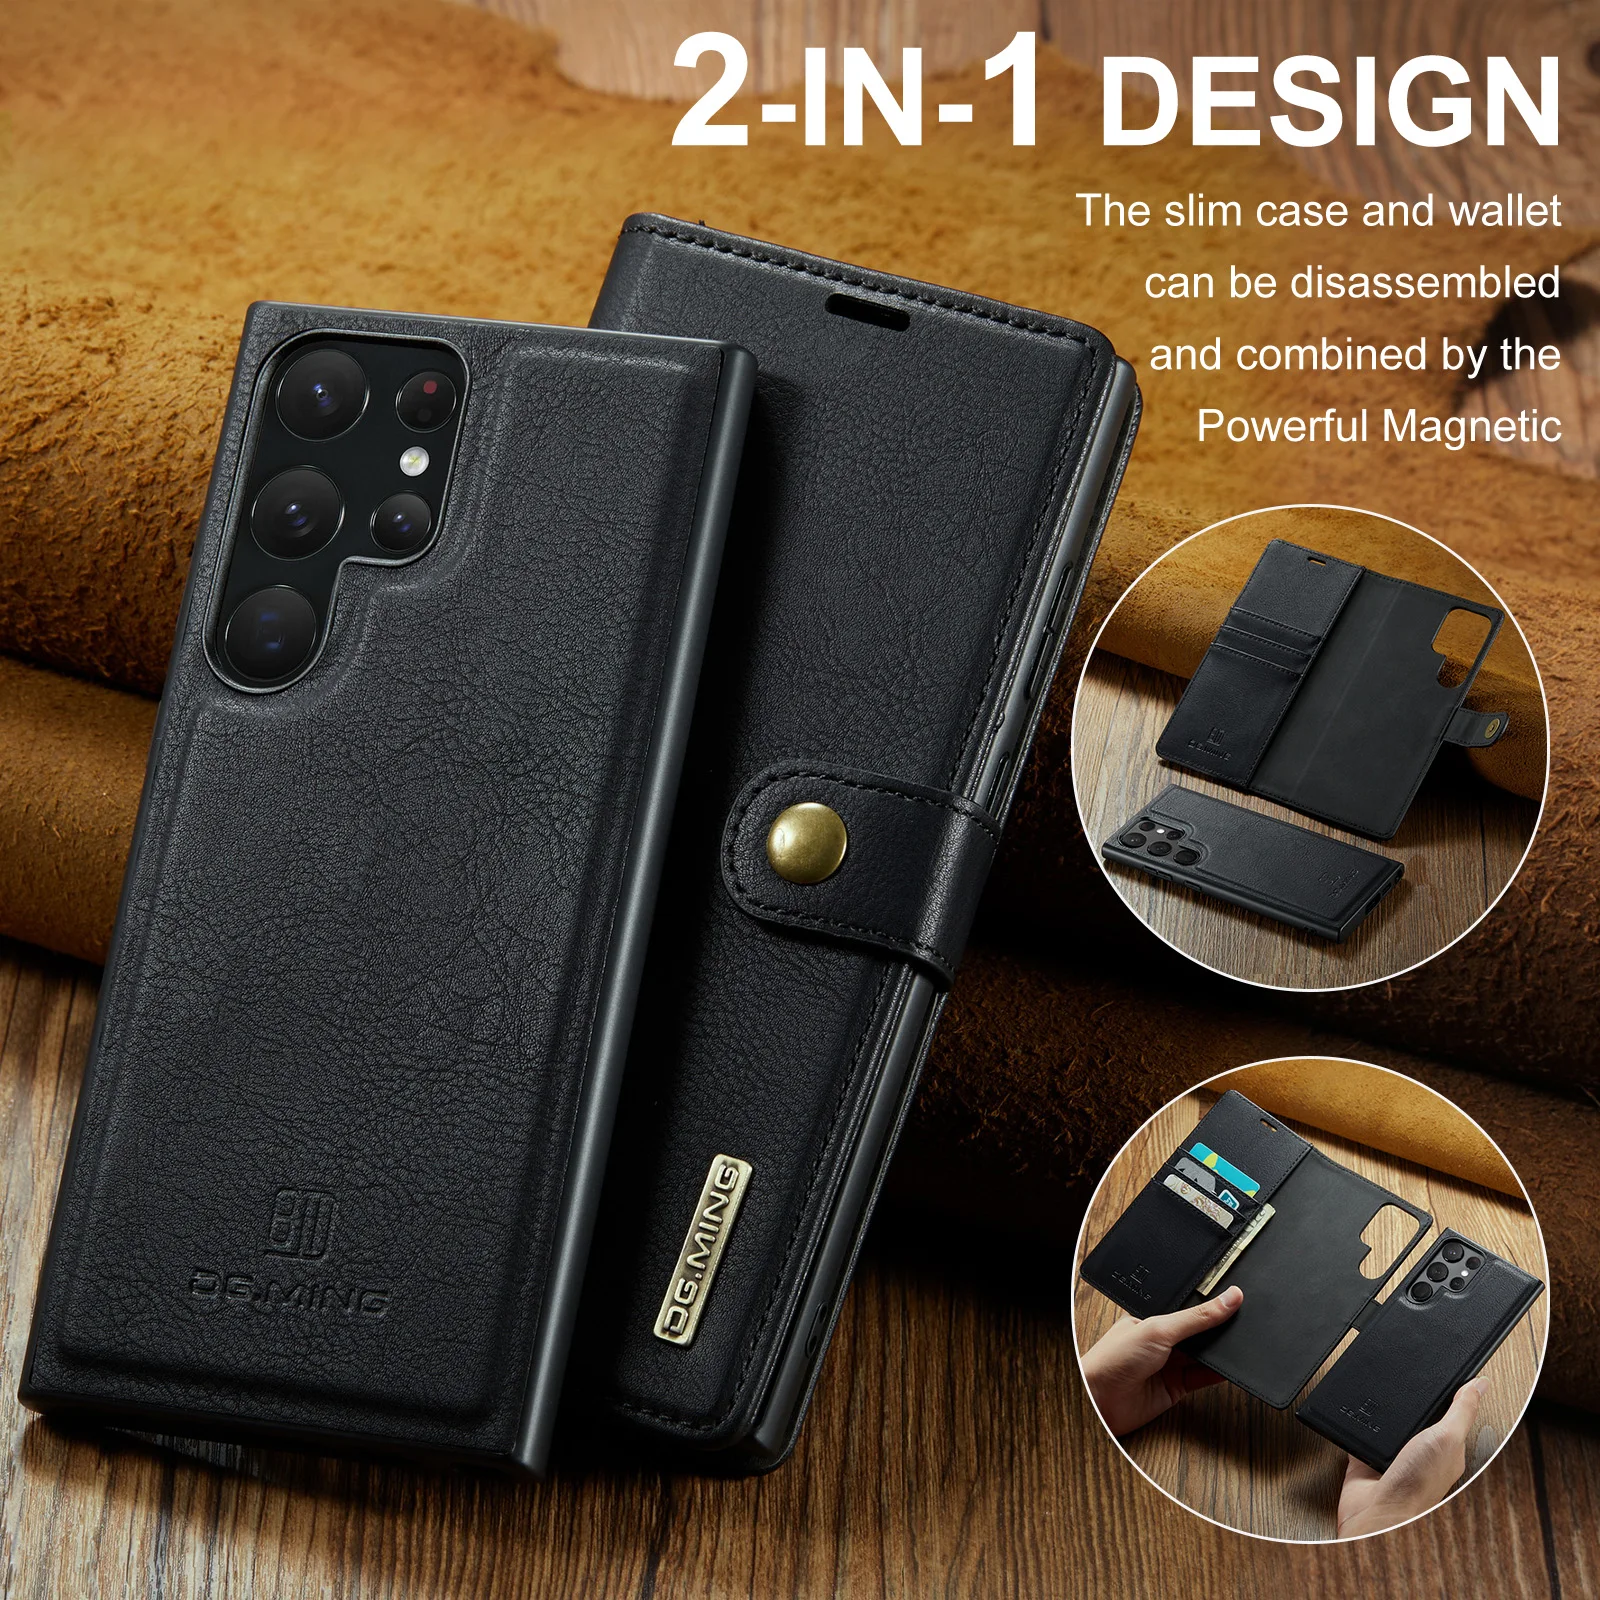 DG.Ming Для Samsung S7 S8 S9 S10 Plus, 2-Х Складной Магнитный чехол-бумажник, чехол для телефона Galaxy Note 8 9 10 Plus A10 A20 A30 A40 A50 A70